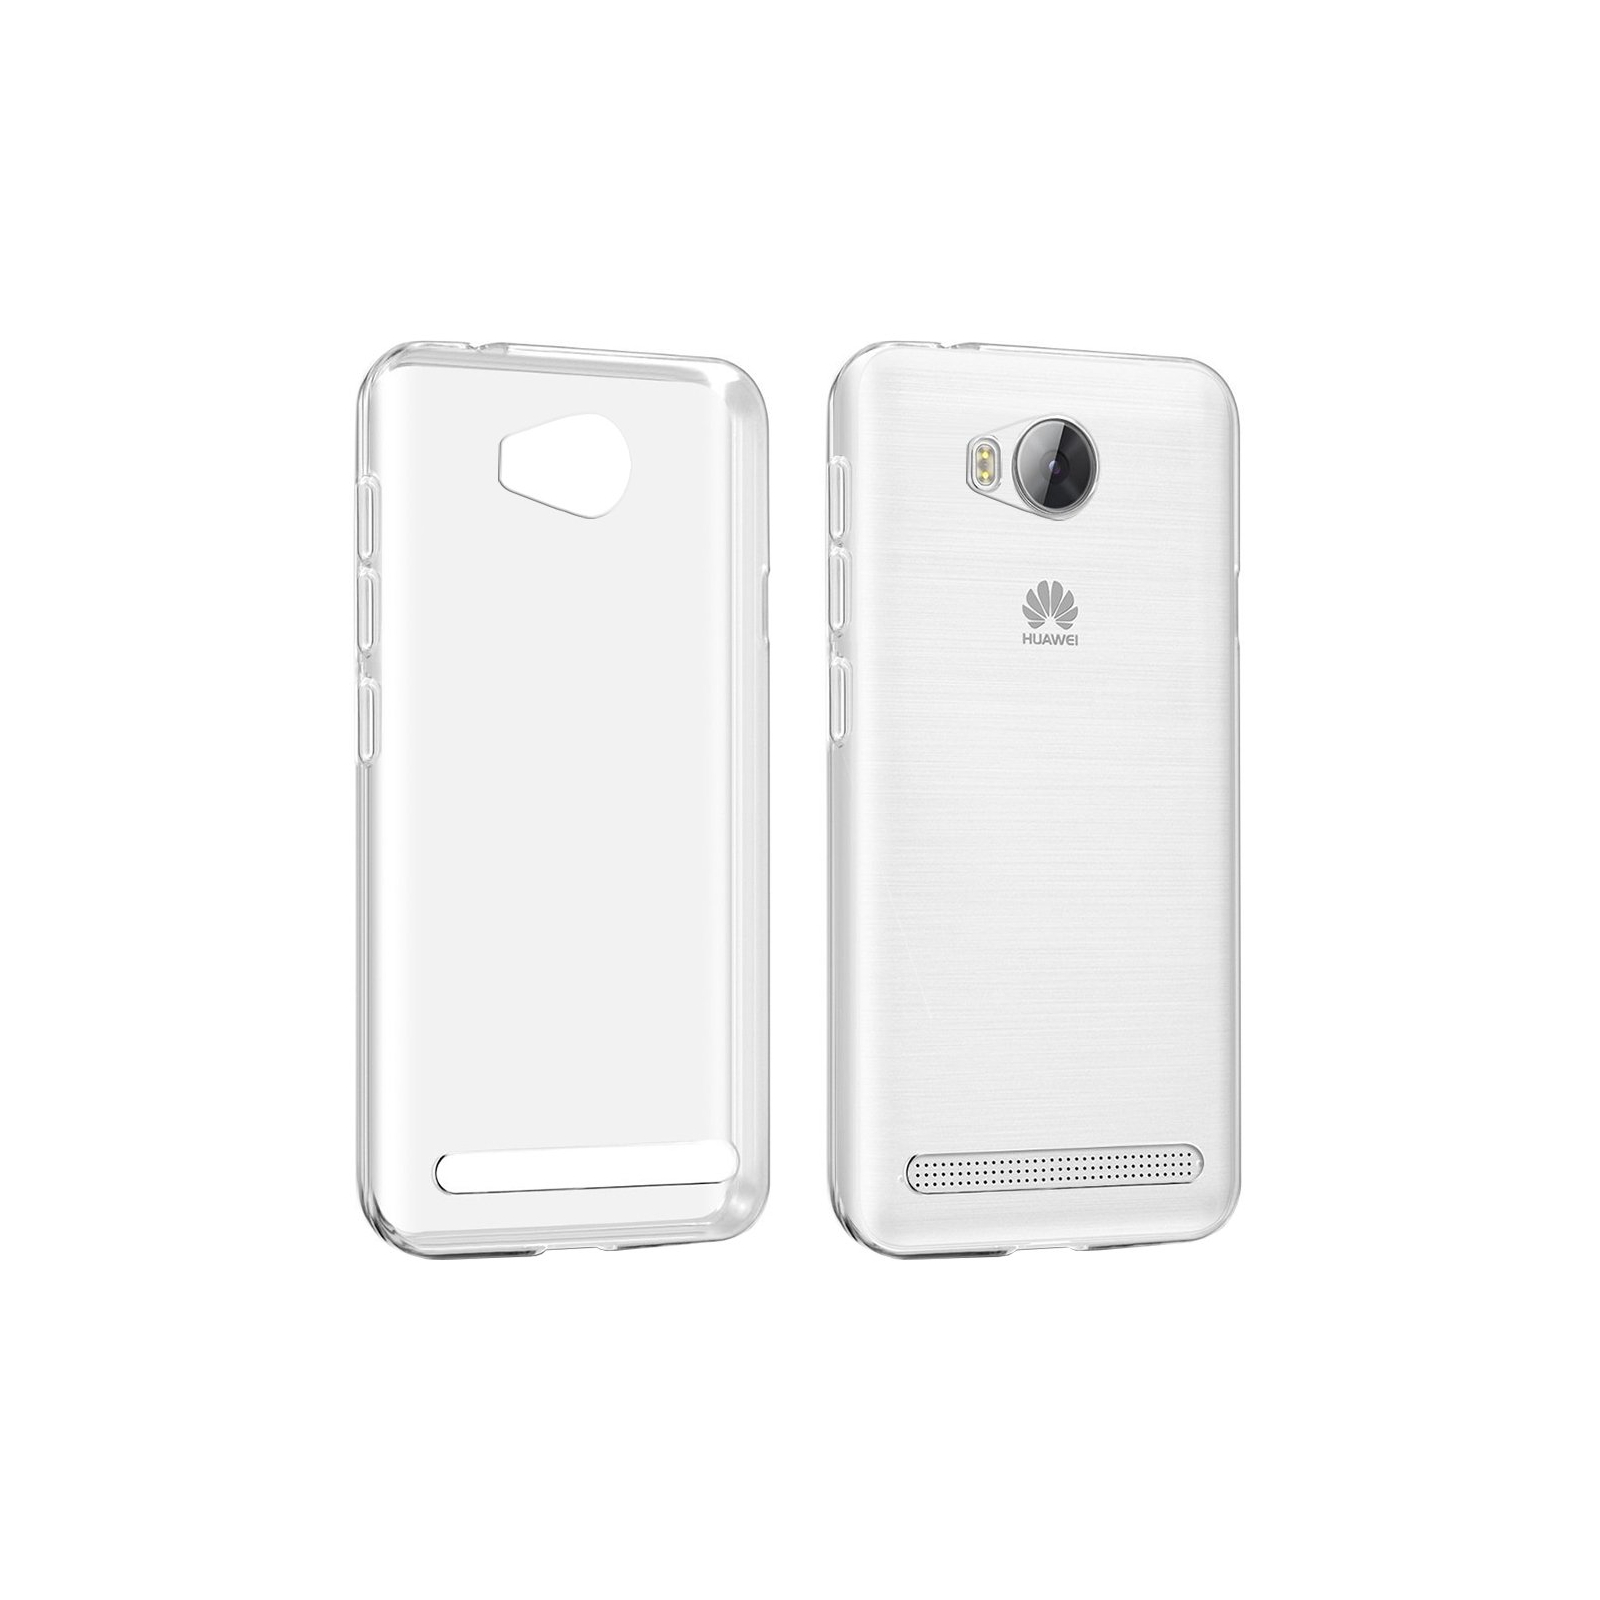 Чехол для мобильного телефона для Huawei Y3 II Clear tpu (Transperent) Laudtec (LC-HY3IIT)